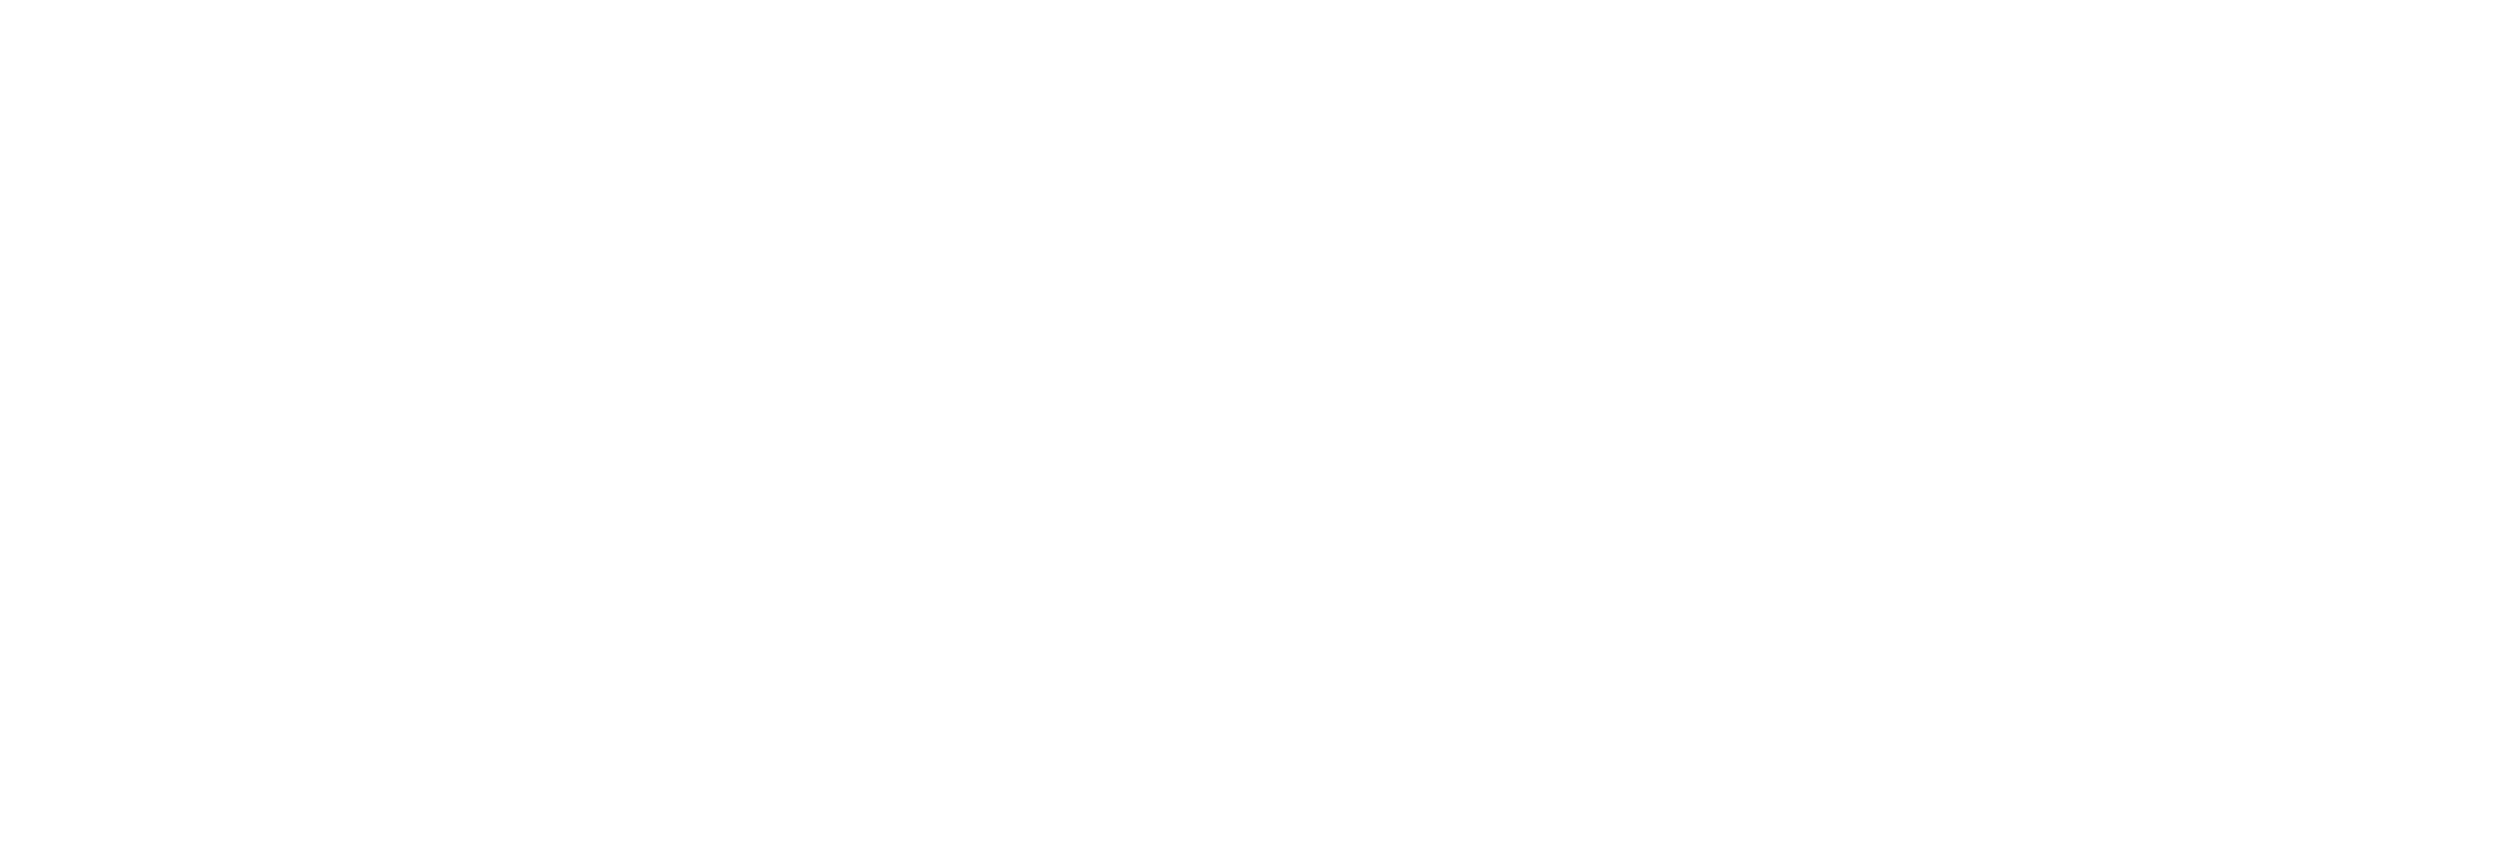 Hillbrook School logo